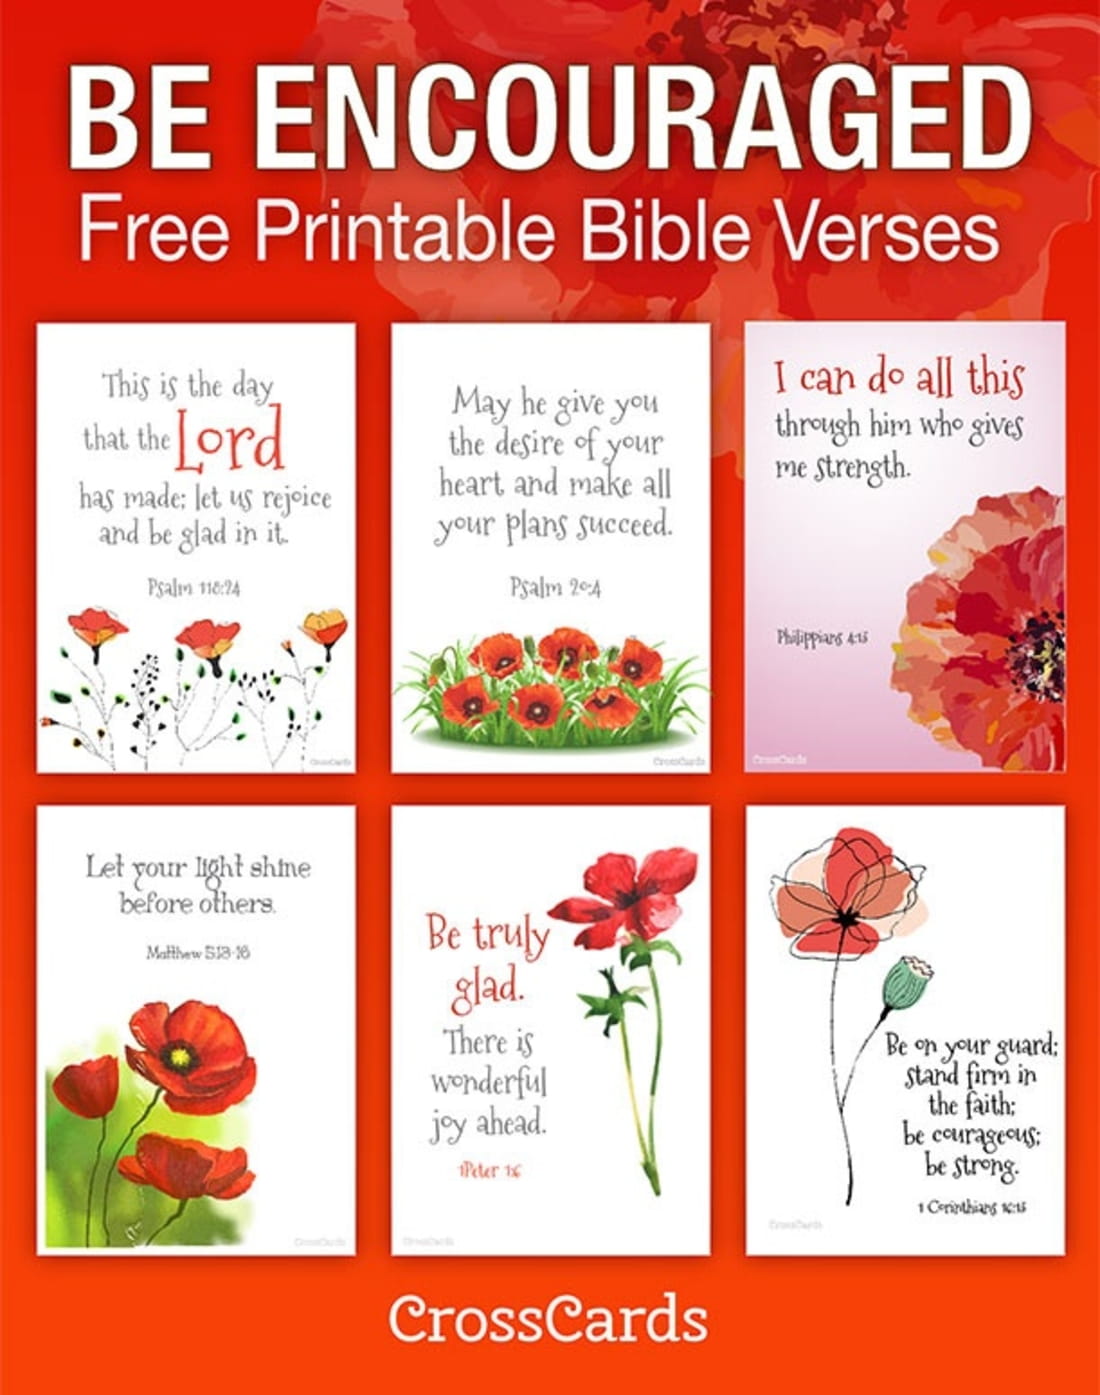 Be Encouraged! Free Printable Bible Verses